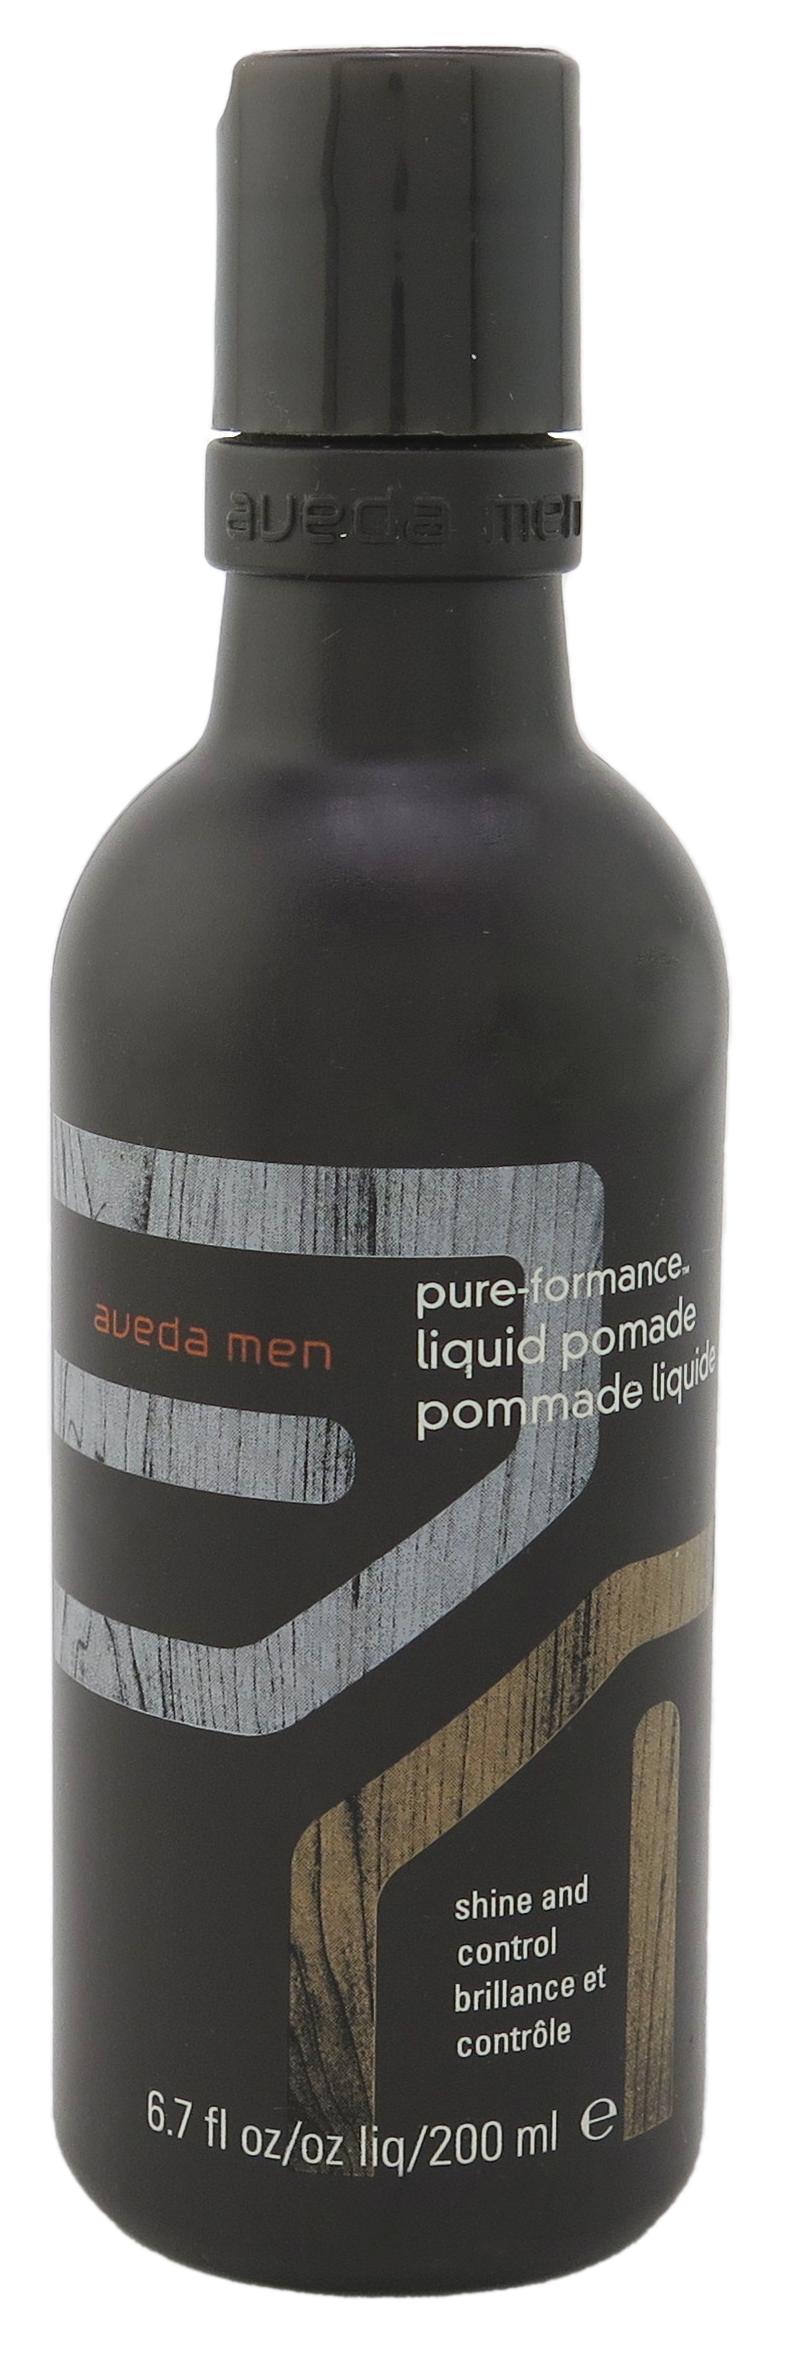 Aveda Men Pure-Formance Liquid Pomade 6.7 Fl oz